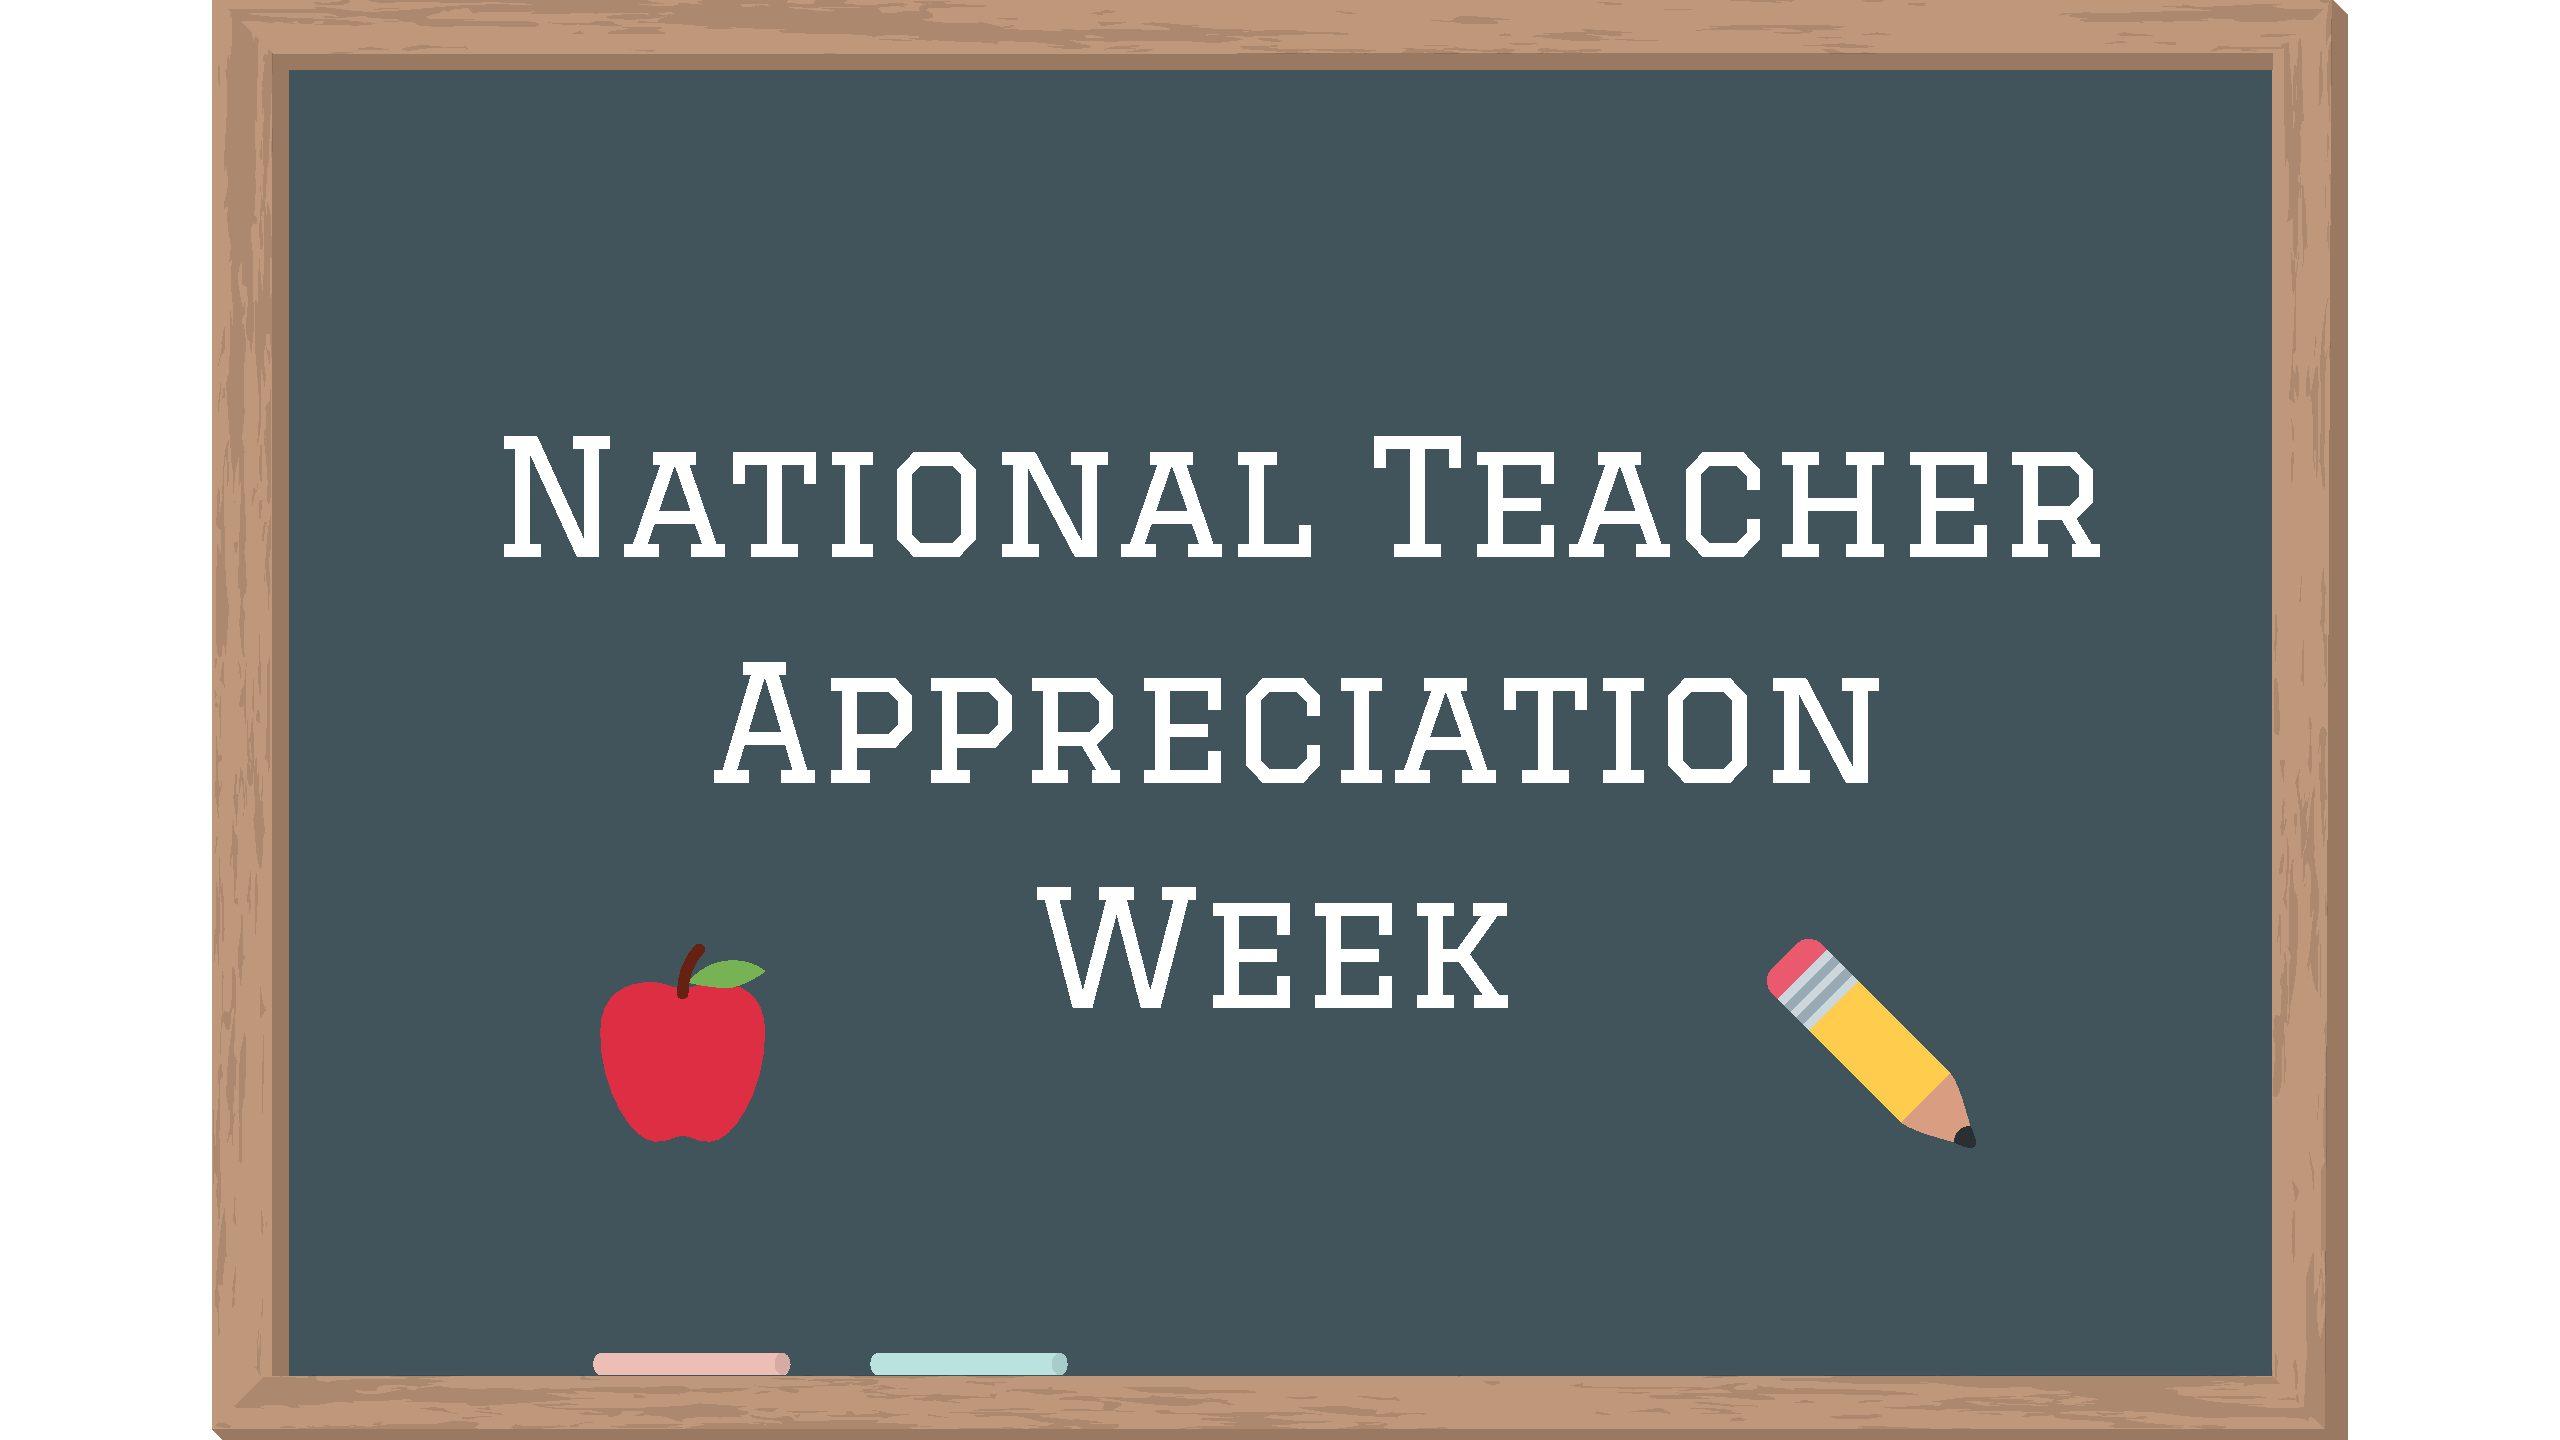 Students acknowledge teachers during National Teacher Appreciation